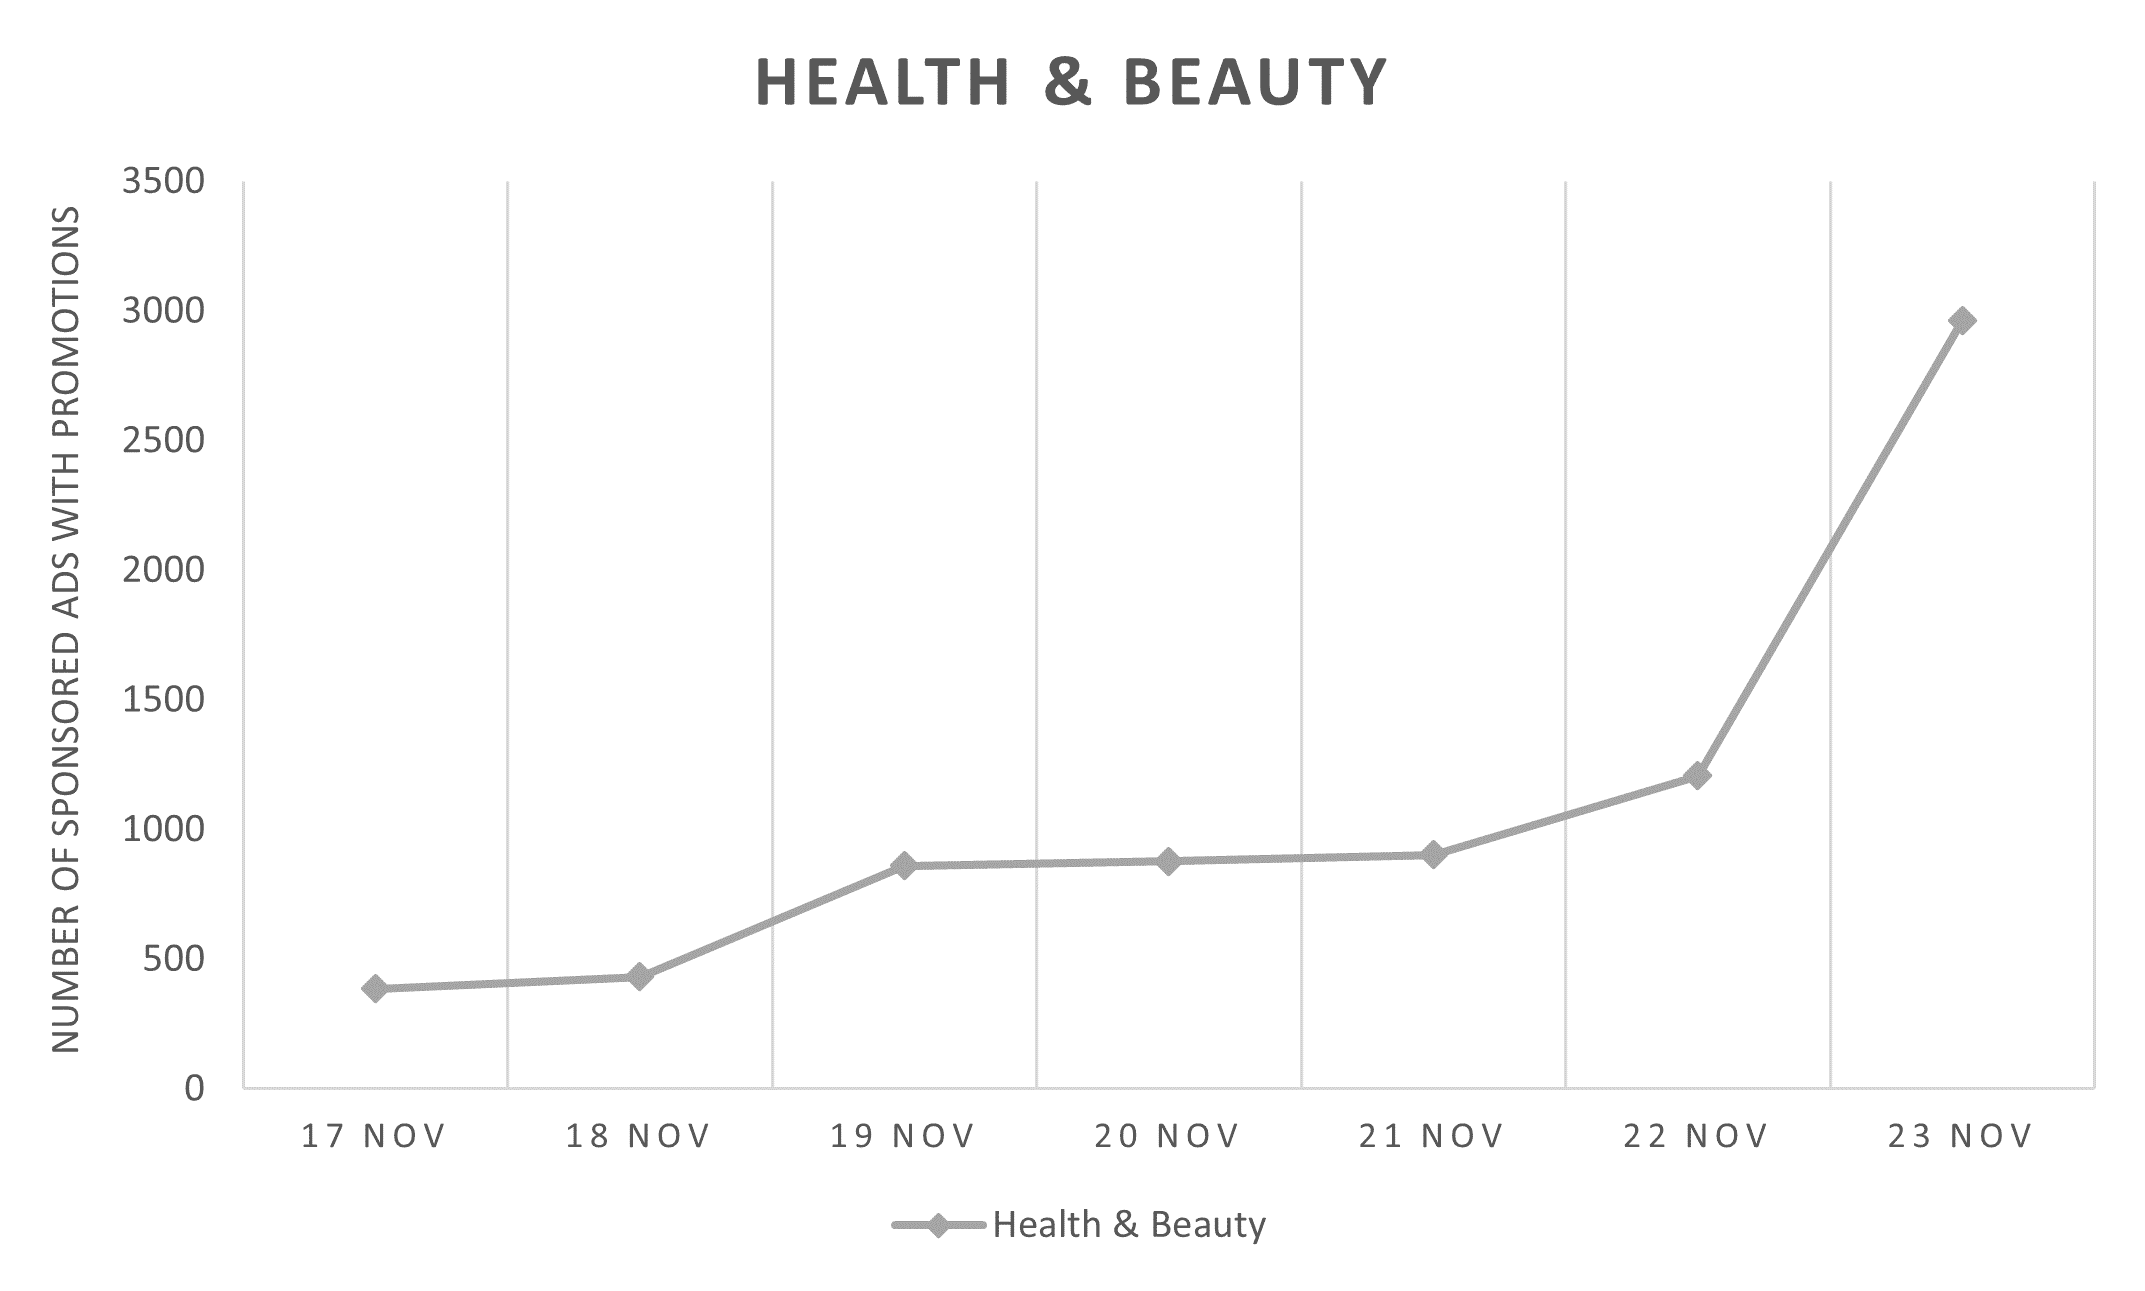 Health & Beauty - sponsored ads trends